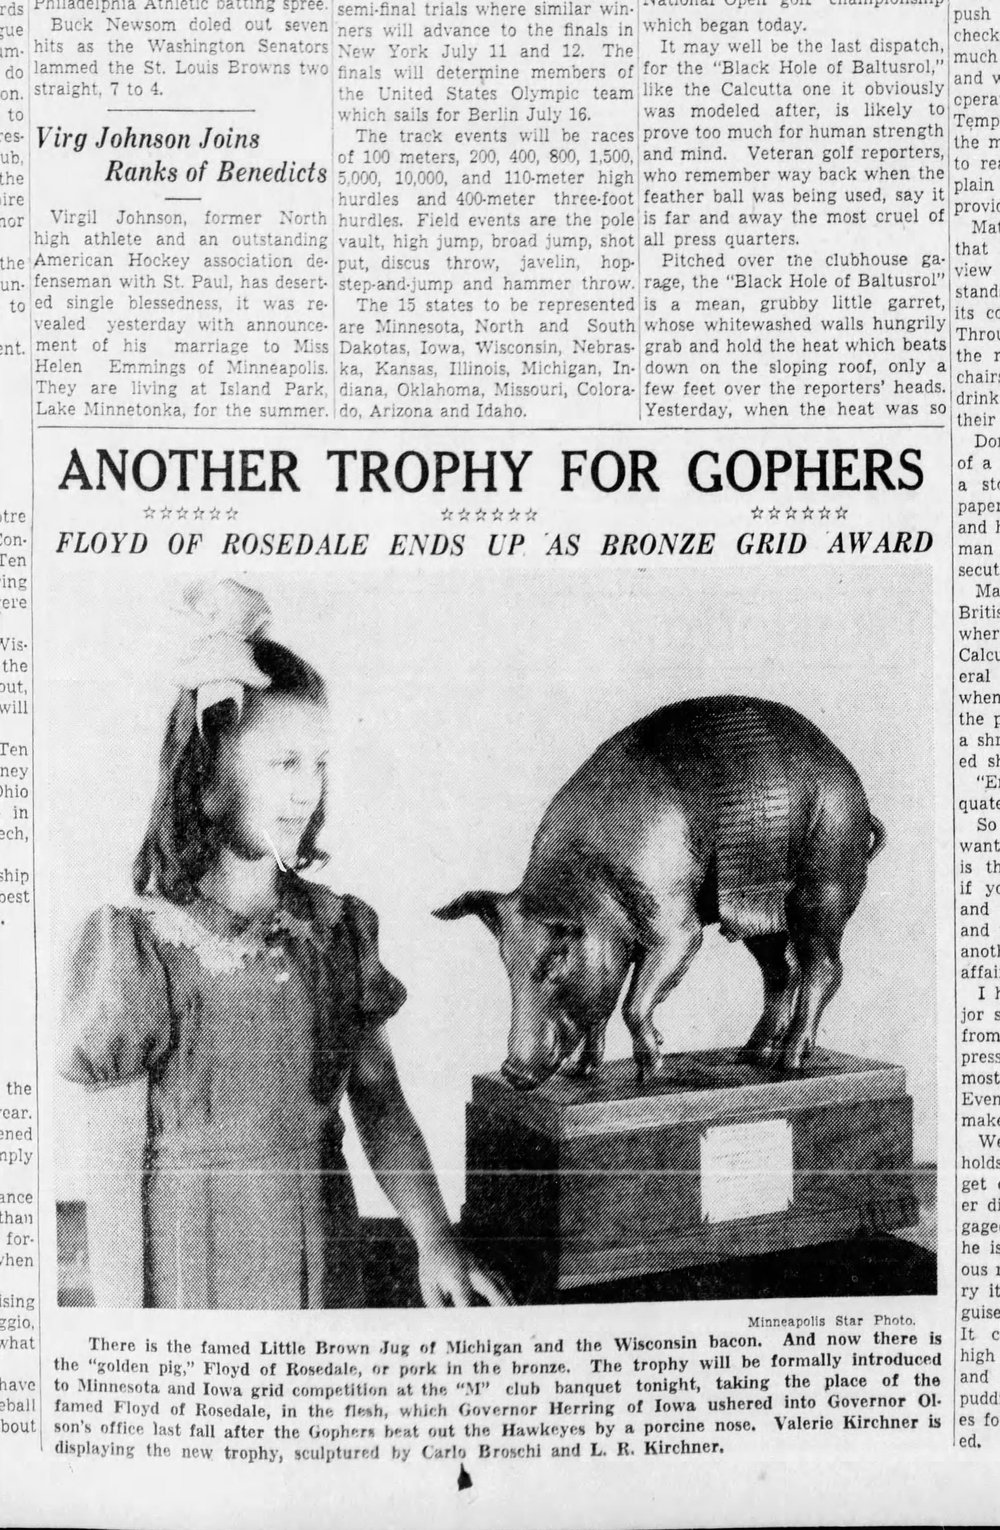 trophy photo 1936.jpg